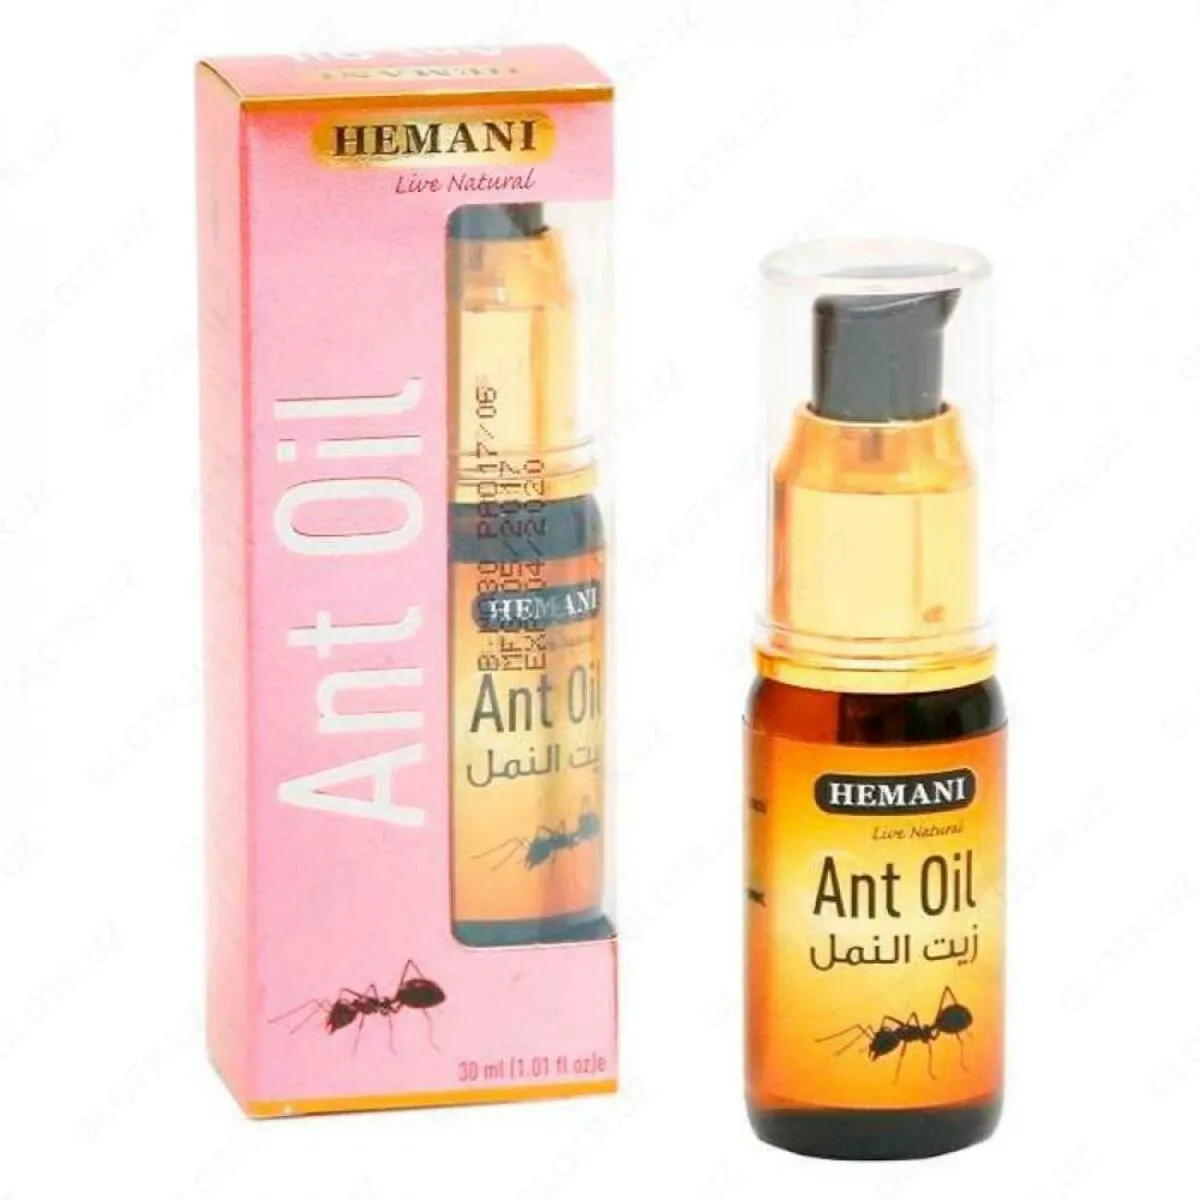 Муравьиное масло Ant oil#2